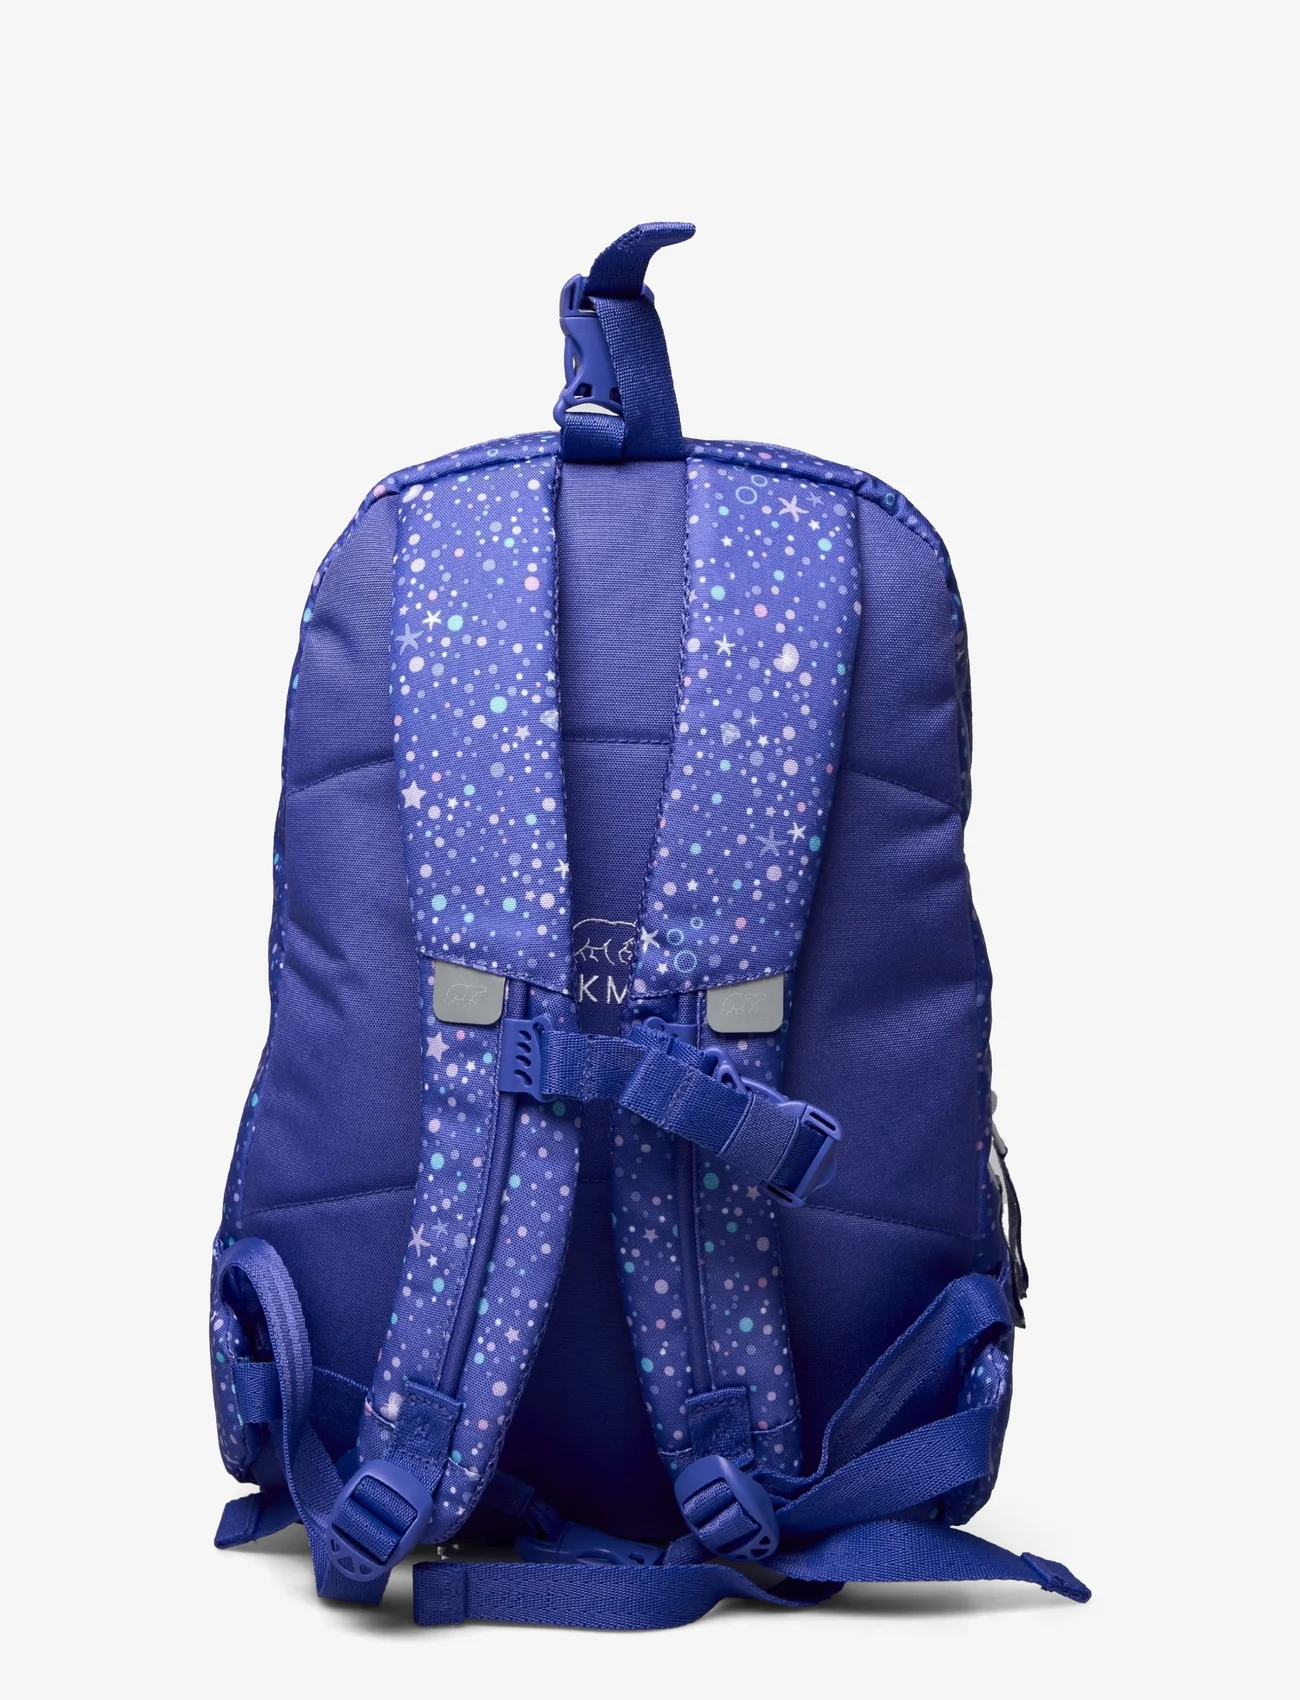 Beckmann of Norway - Gym/Hiking backpack 12L - Aqua Girl - sommerschnäppchen - purple - 1